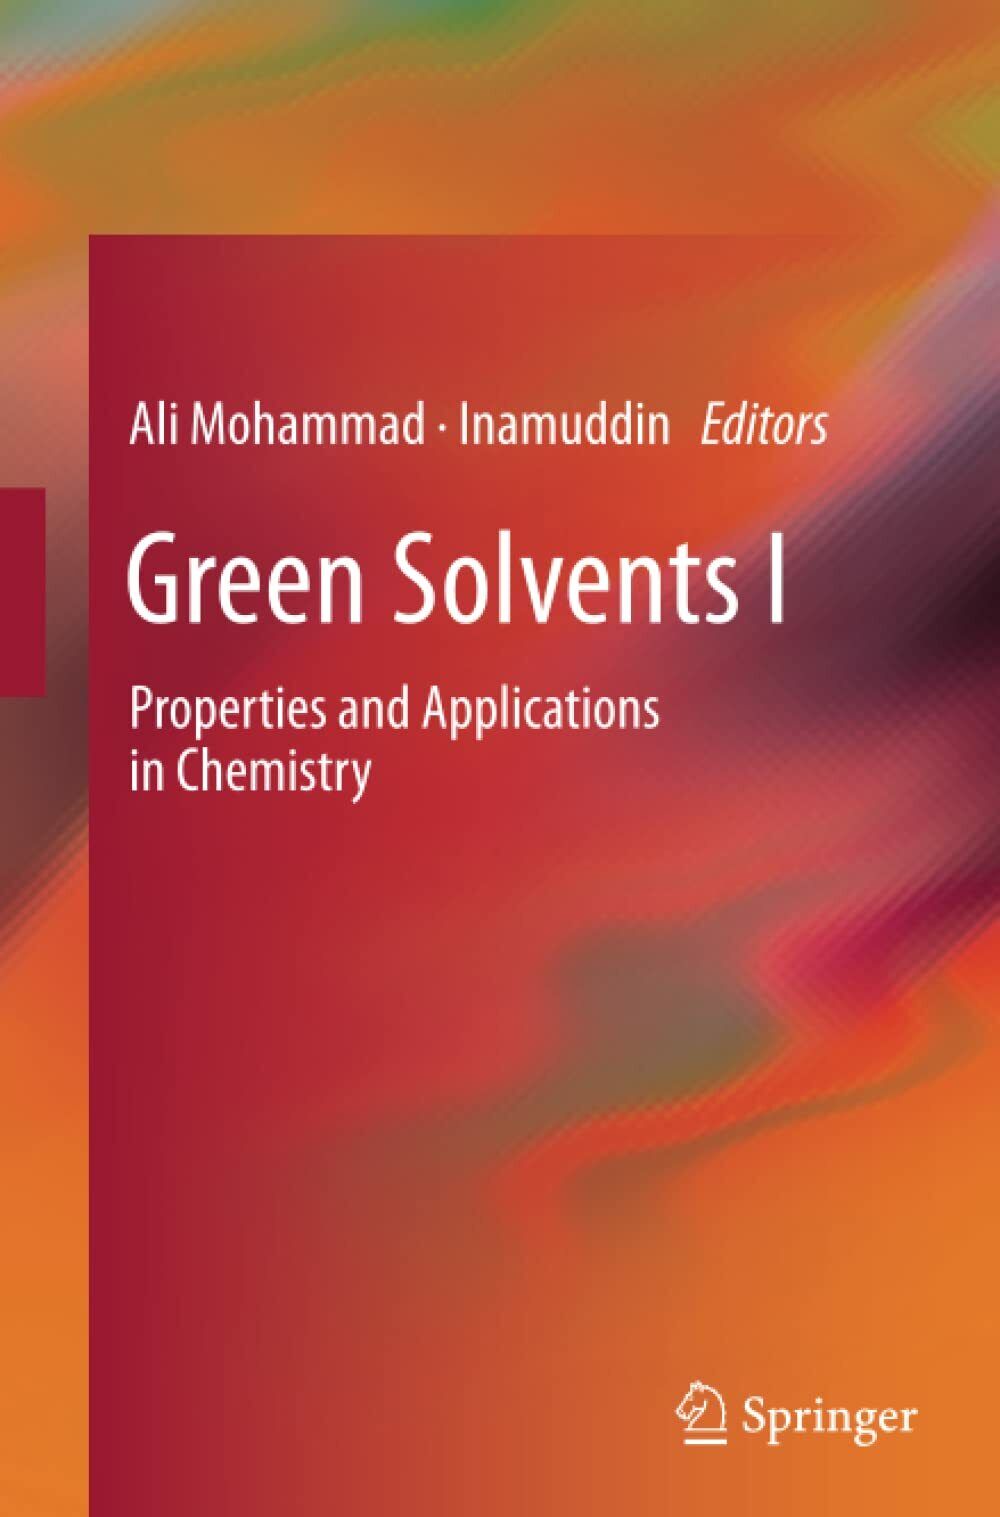 Green Solvents I - Ali Mohammad  - Springer, 2014